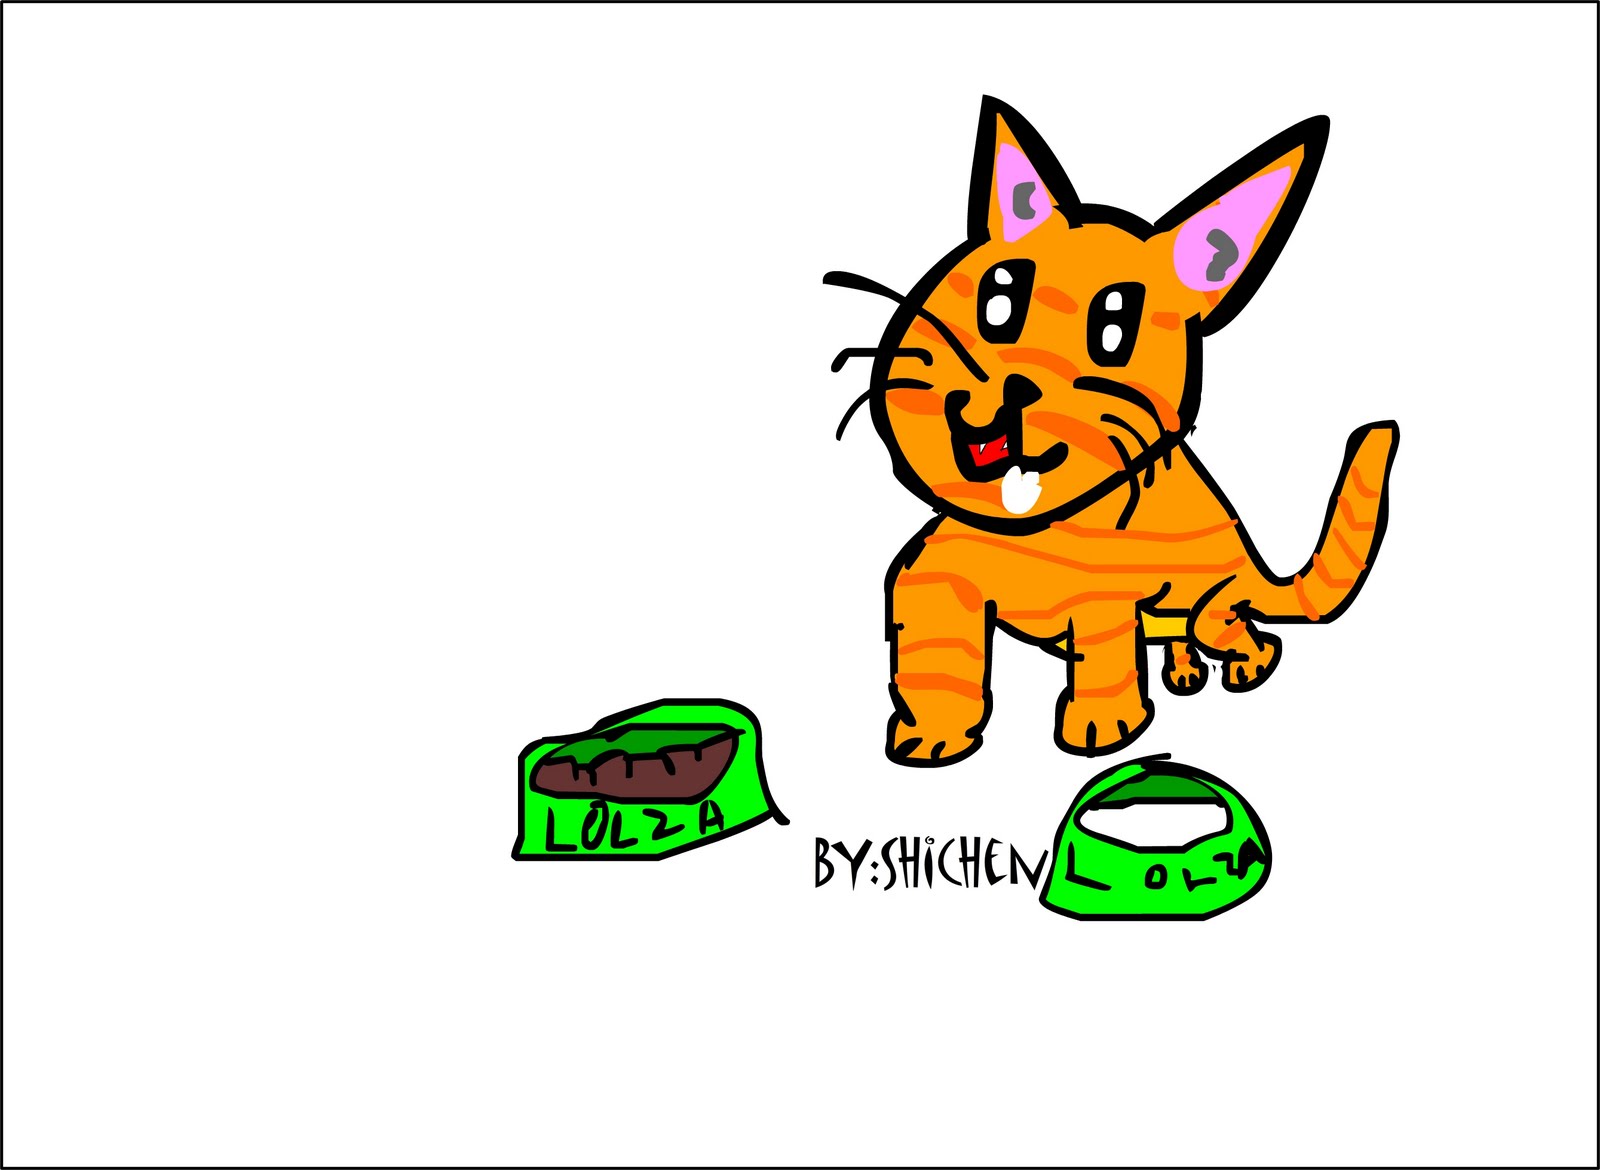 http://3.bp.blogspot.com/_44m0WDwacnI/TF2WZ3ZYK6I/AAAAAAAAABc/tN1lw5AHzfw/s1600/lolza+the+cat.jpg